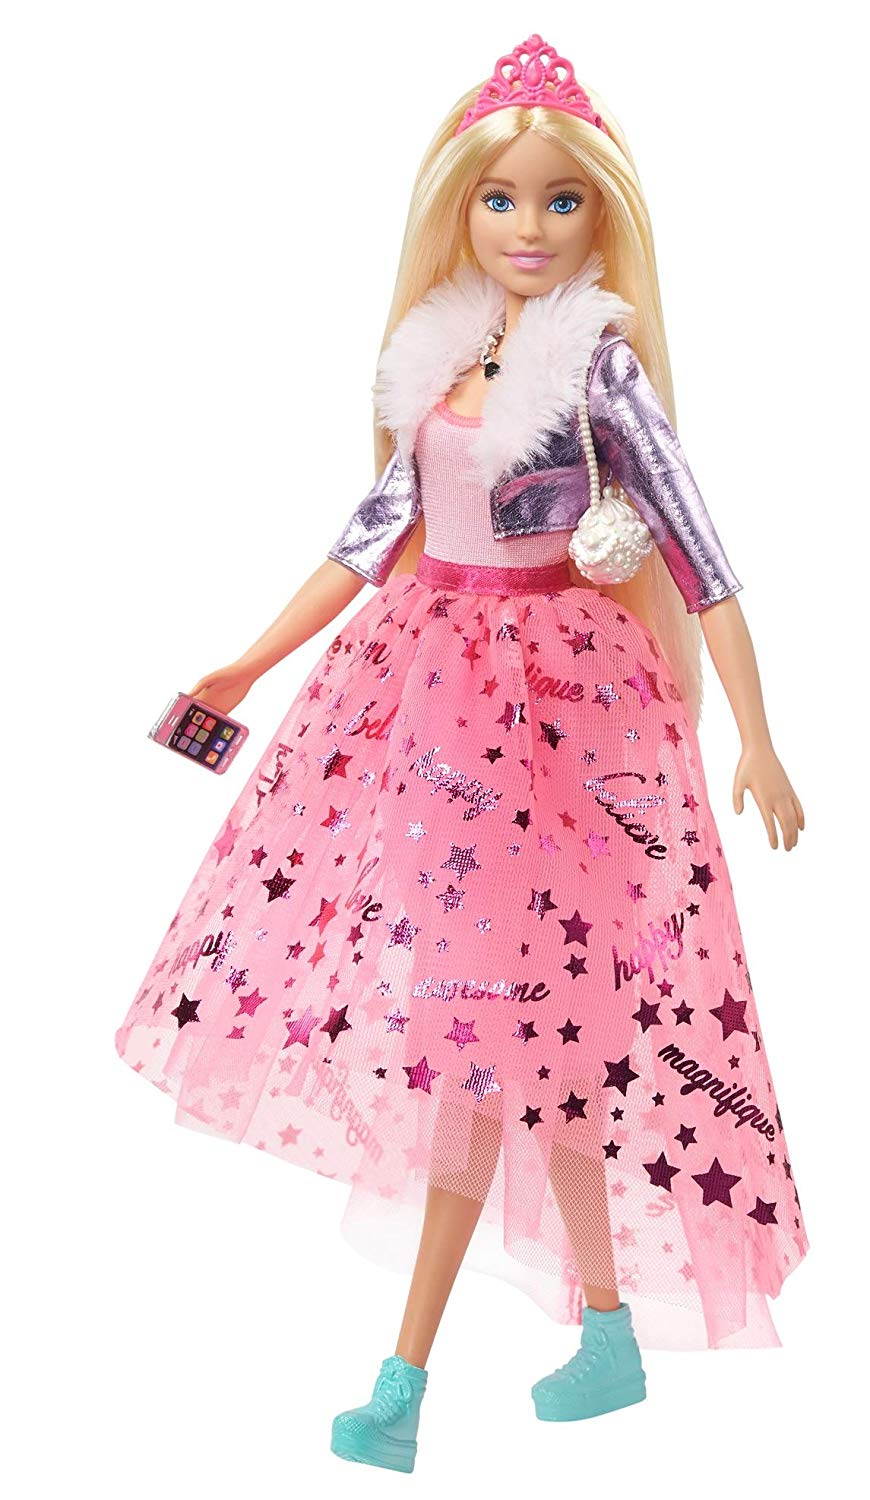 barbie and princess doll